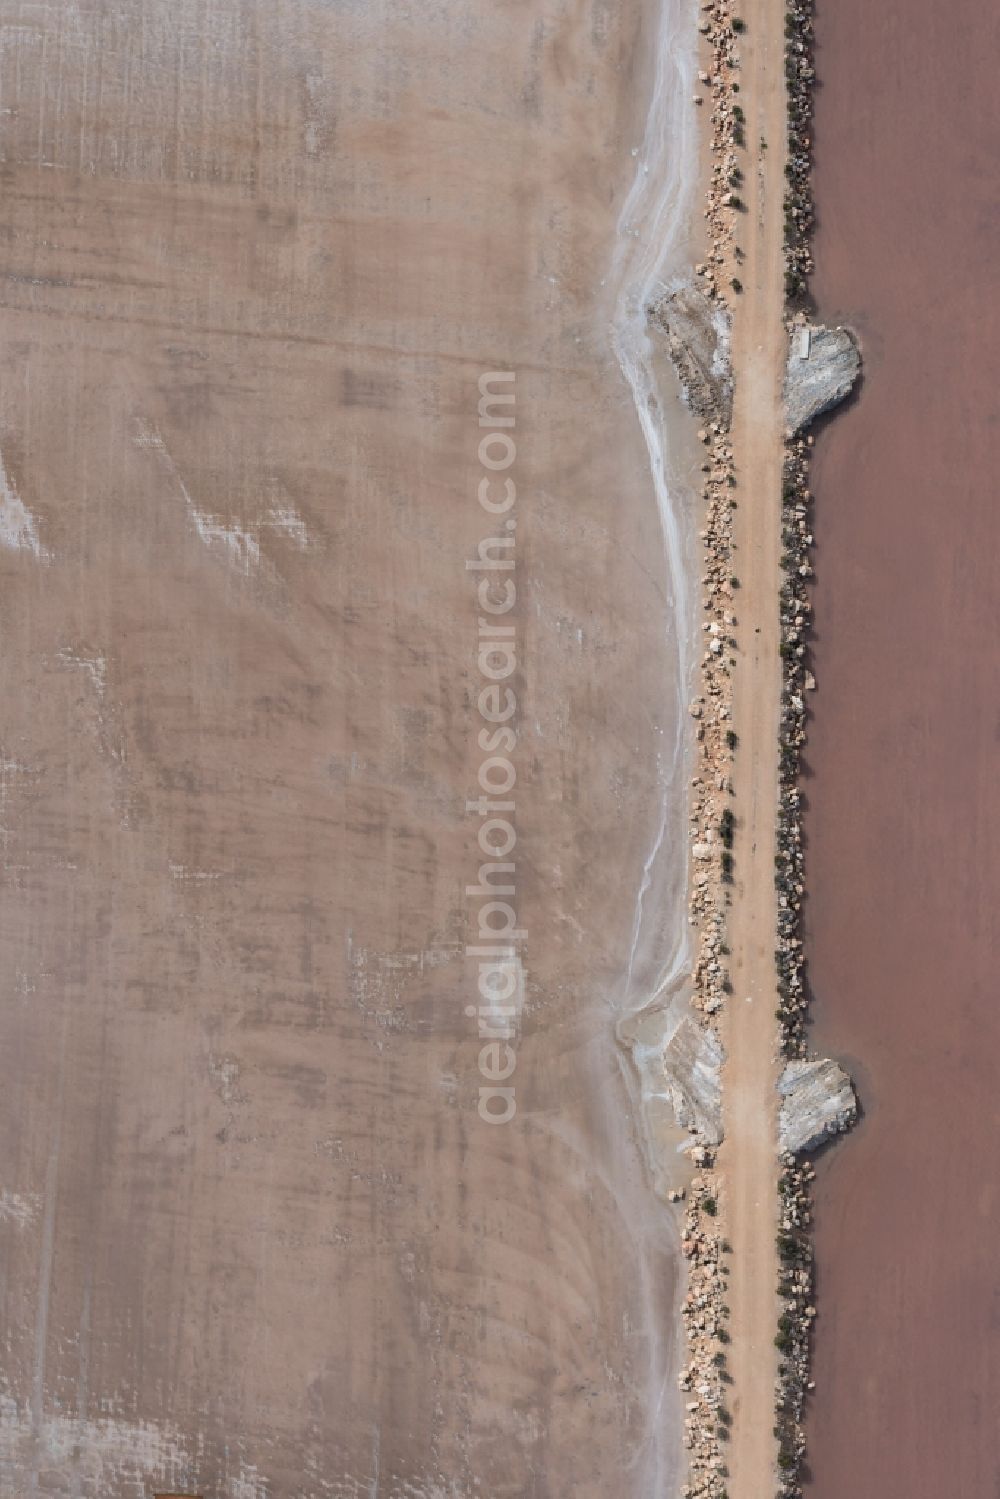 Aerial image Llucmajor - Brown - white salt pans for salt extraction in Llucmajor in Balearic Islands, Spain